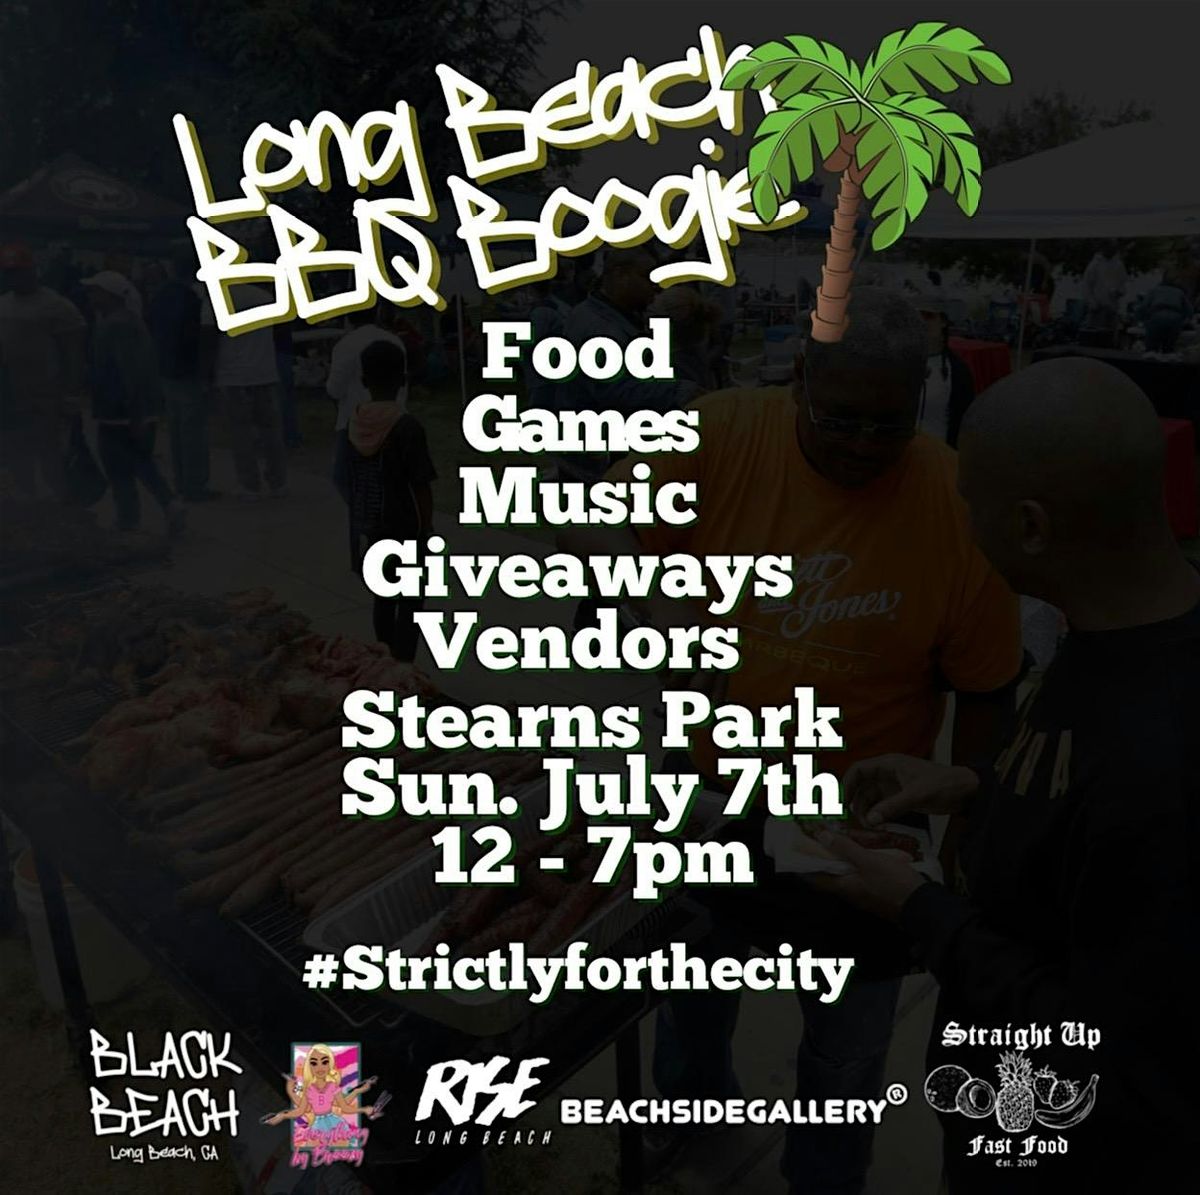 Long Beach BBQ Boogie